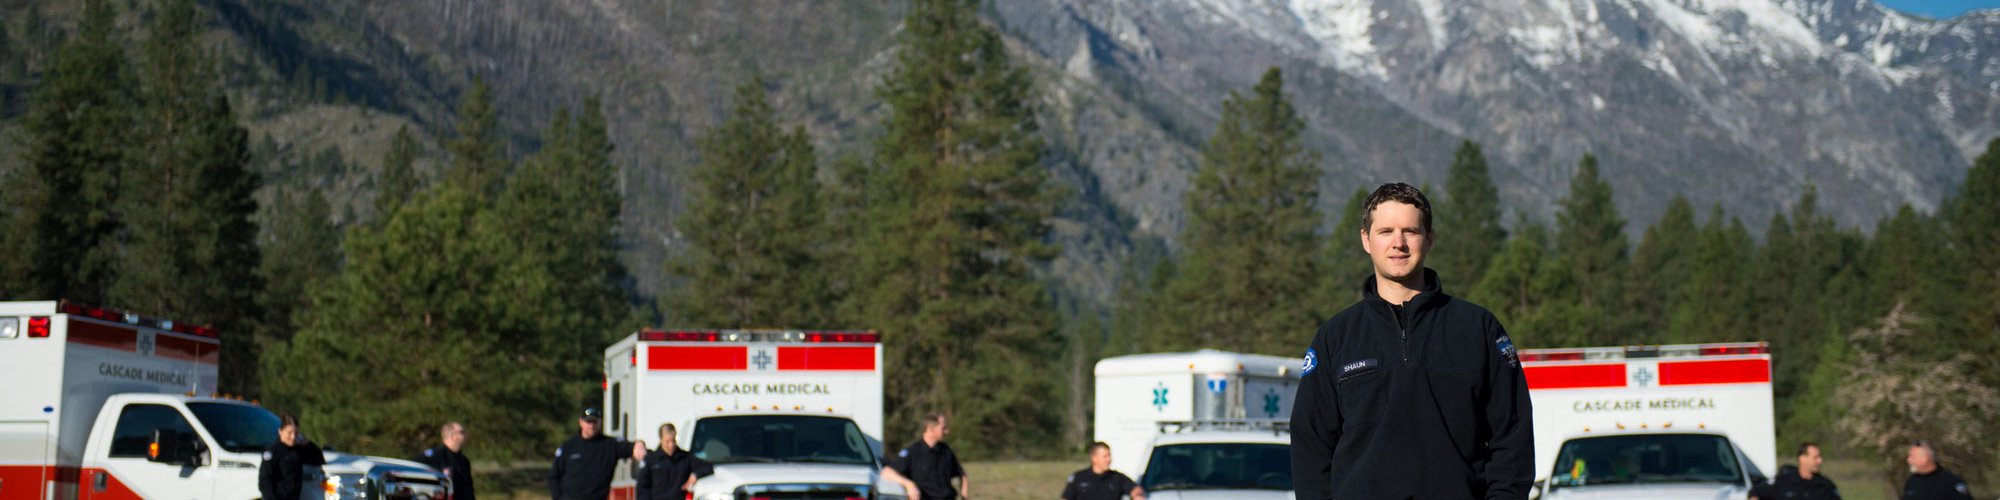 Ambulance Services Cascade Medical